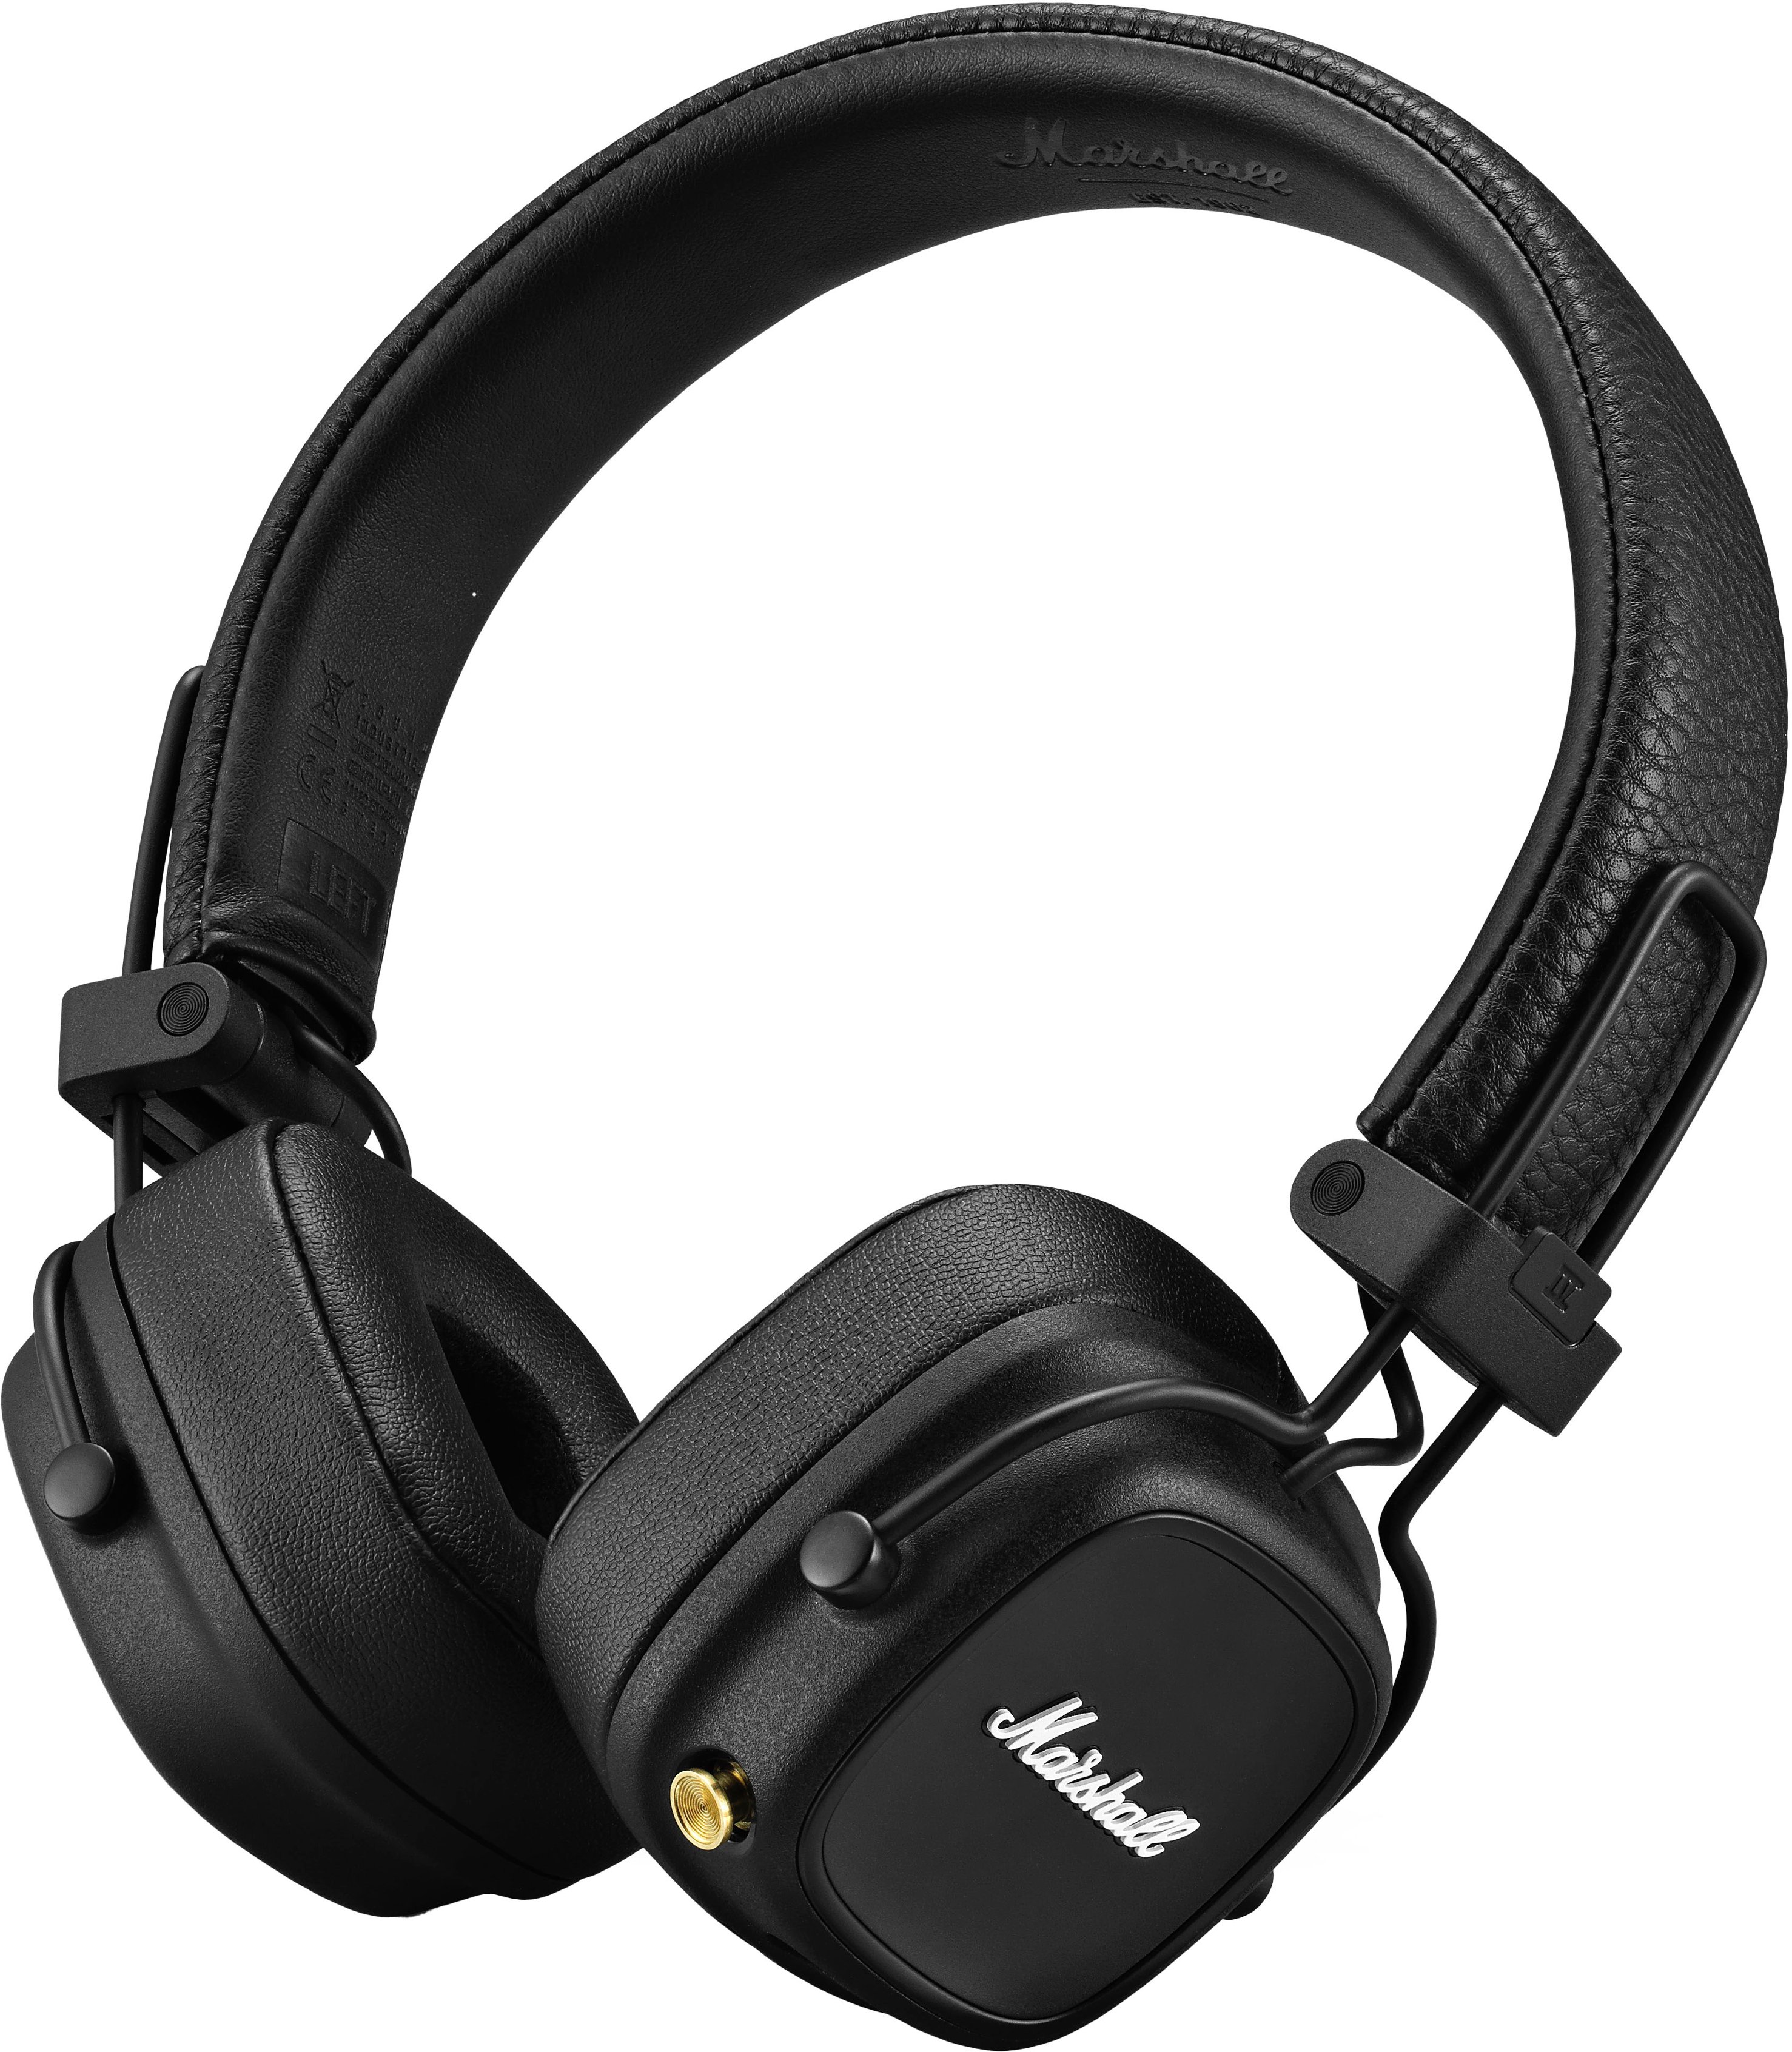 New Marshall Major 2 Headphones Generation Headset Remote Mic HIFI 